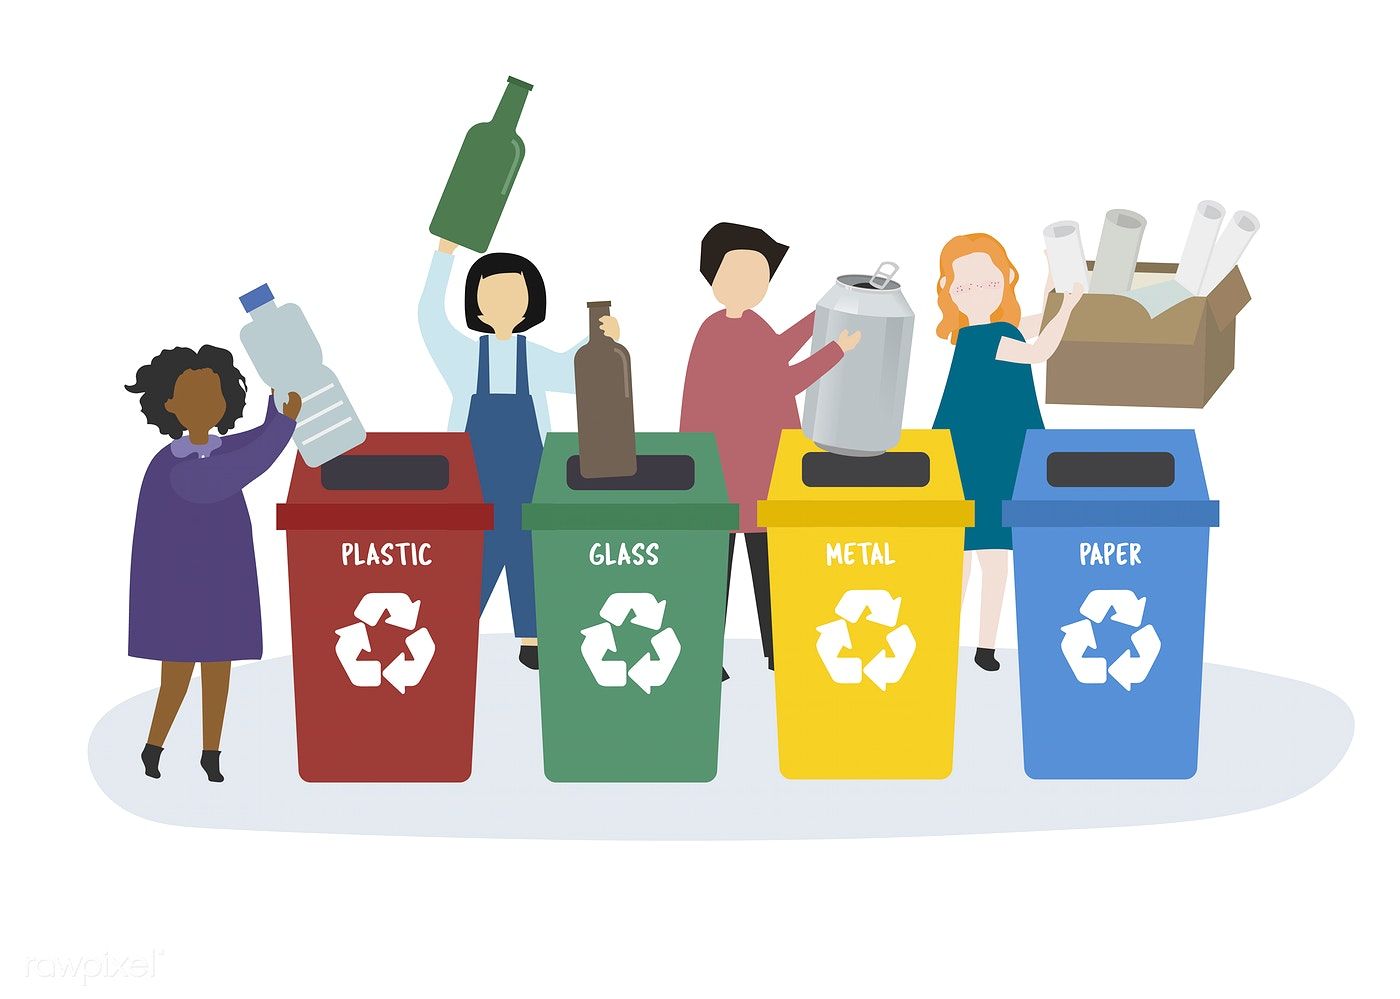 People sorting garbage into recycle bins